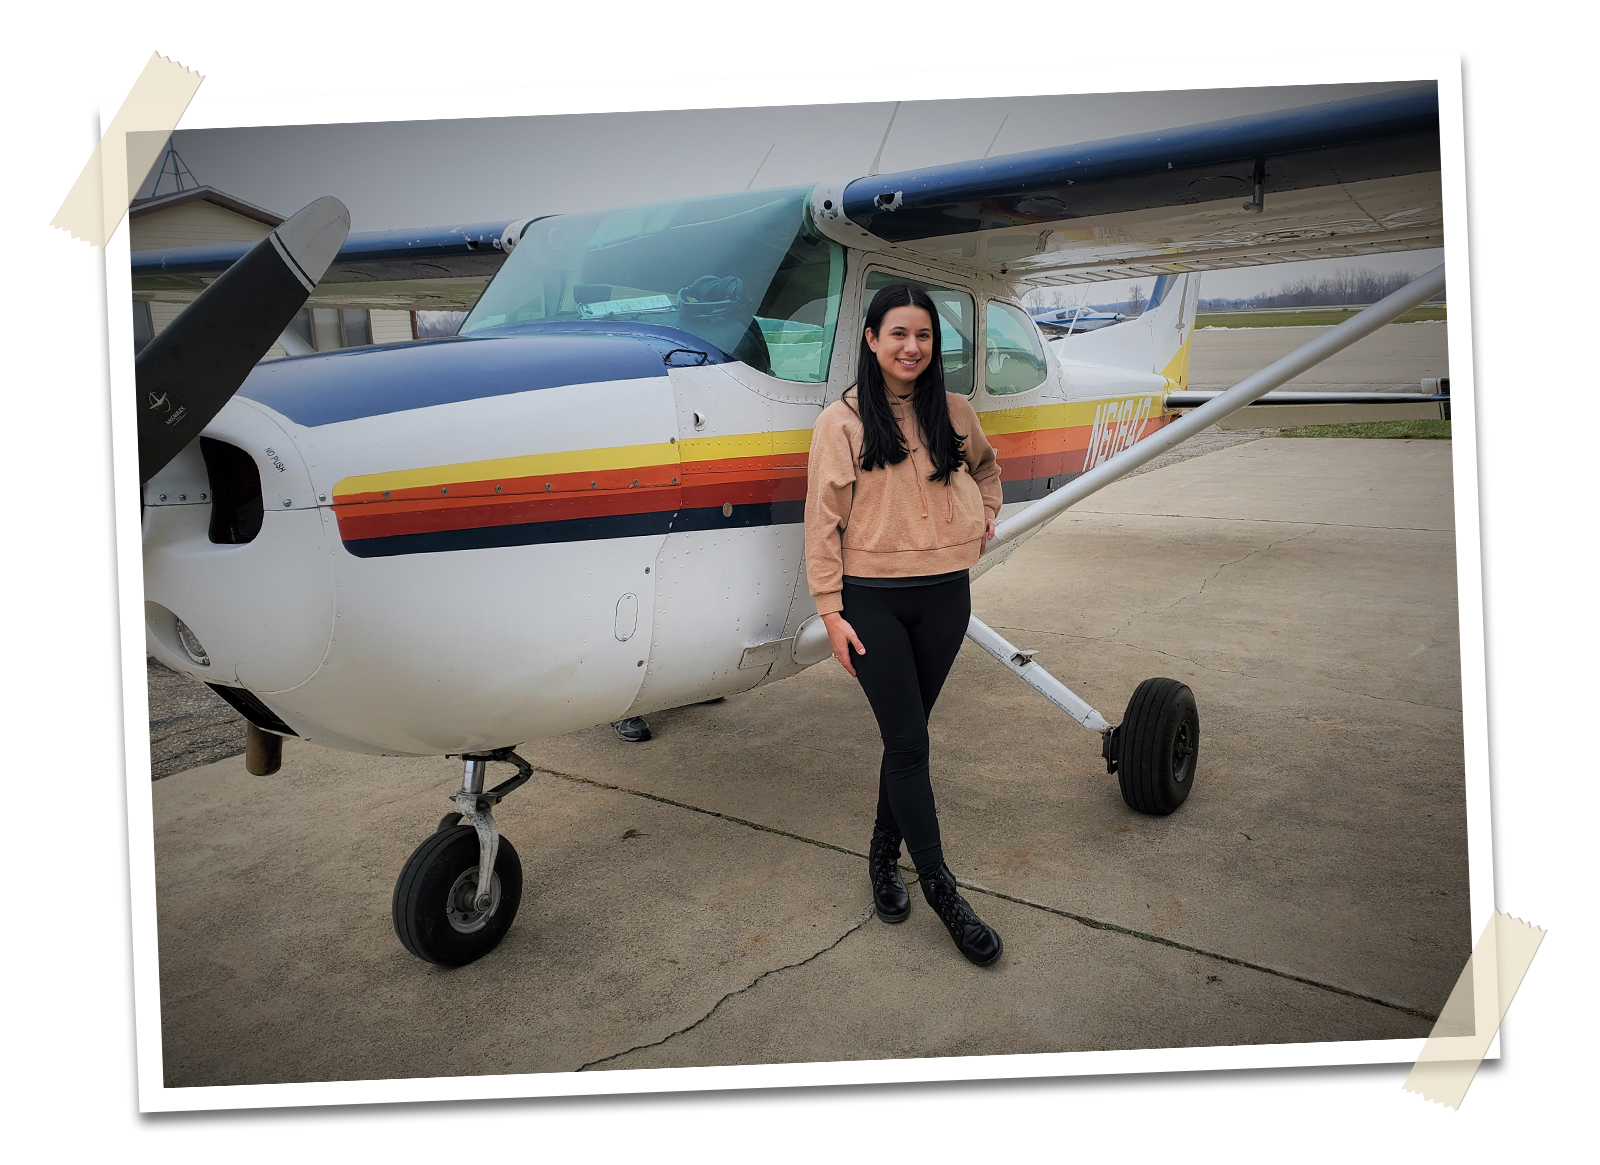 Get Your Tailwheel Endorsement at SkyWalker Flying in Adrian, Michigan